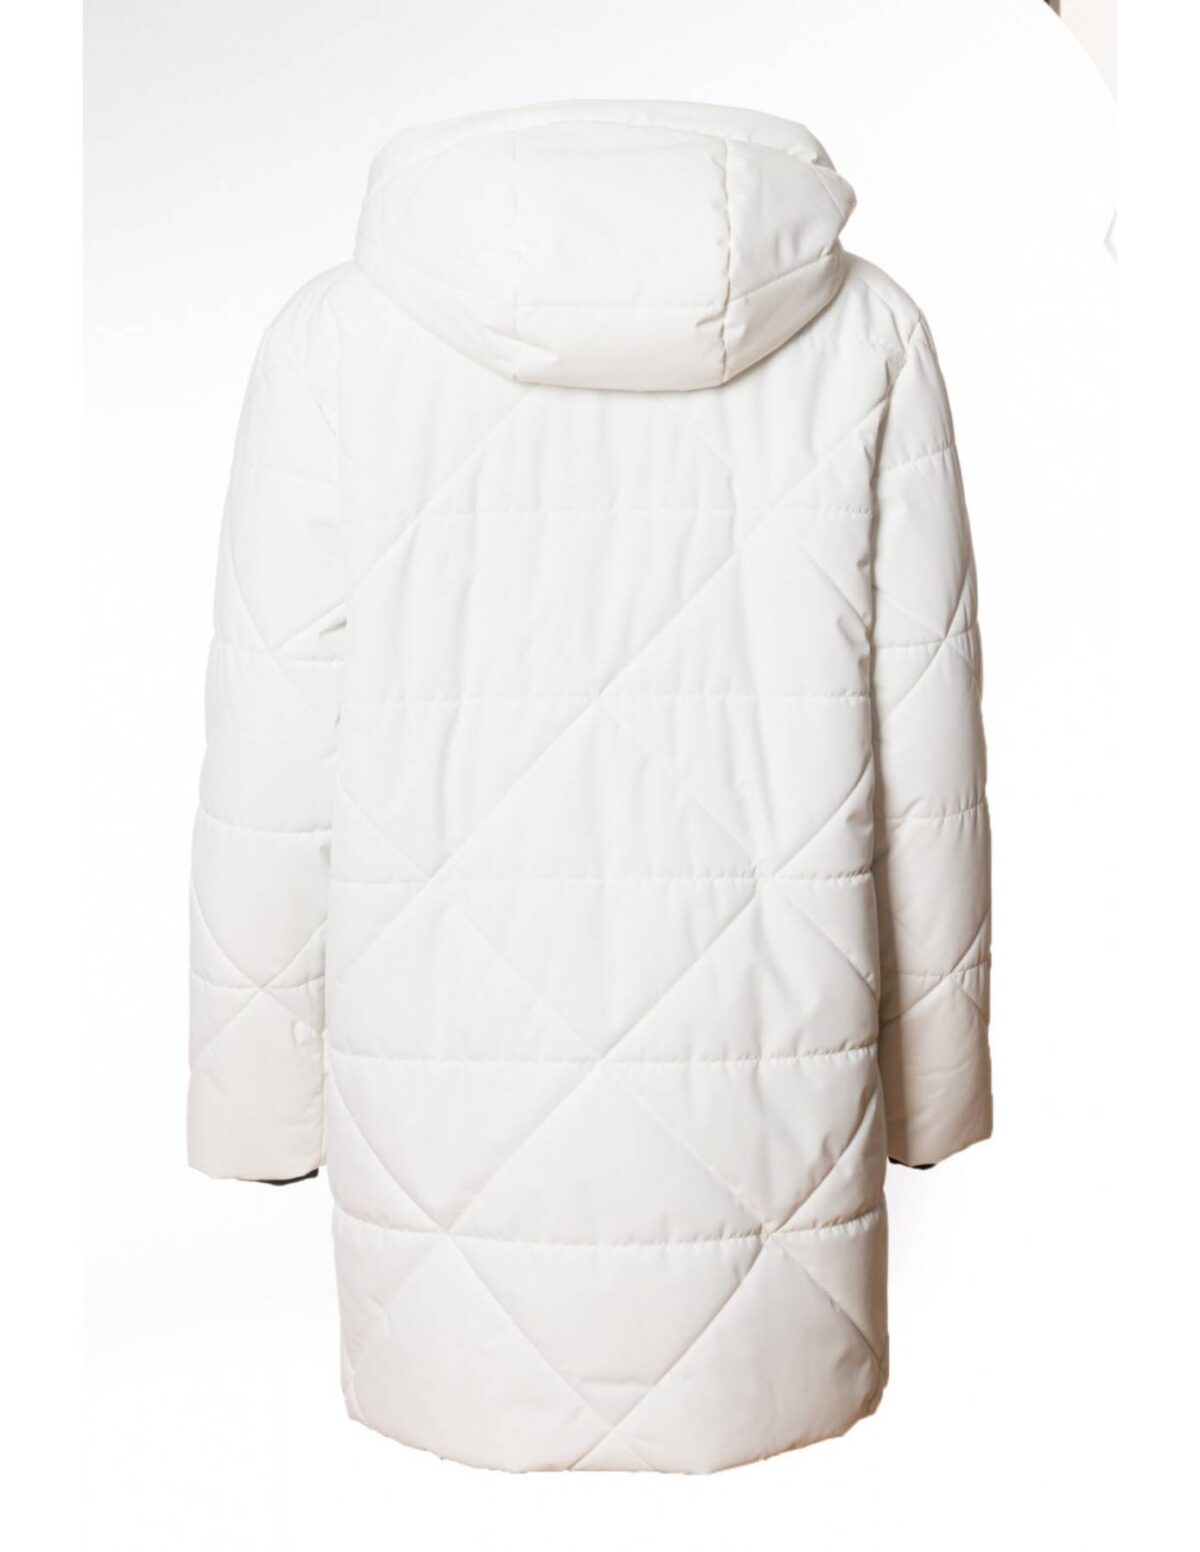 white_lightweight_warm_jacket_parka_coat_hood_woman_7seasons_sorona_aura_